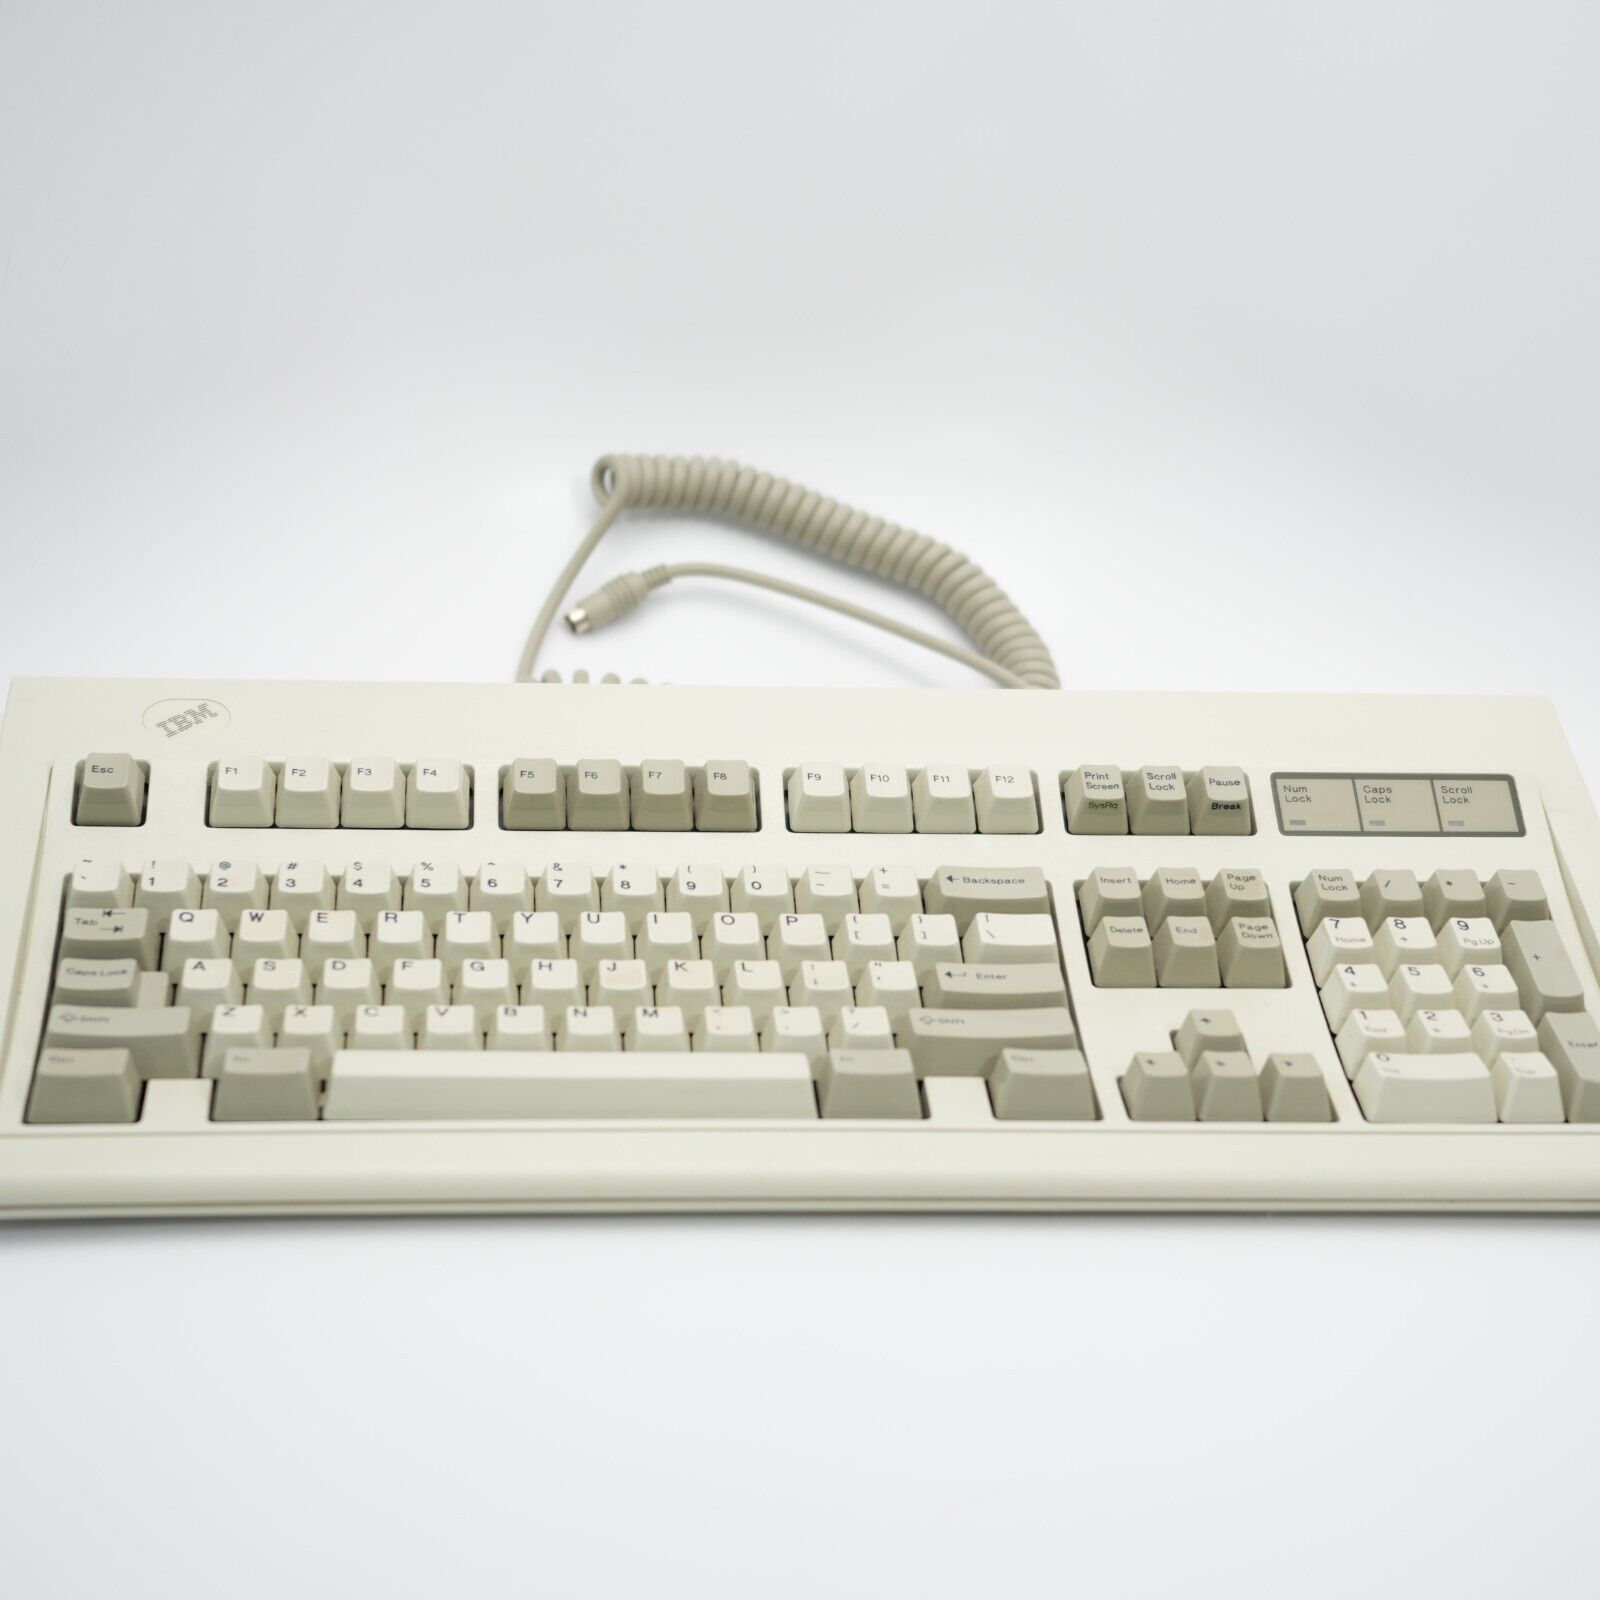 EUC Vintage IBM Keyboard Model M 1391401 1984 USA GREAT CONDITION